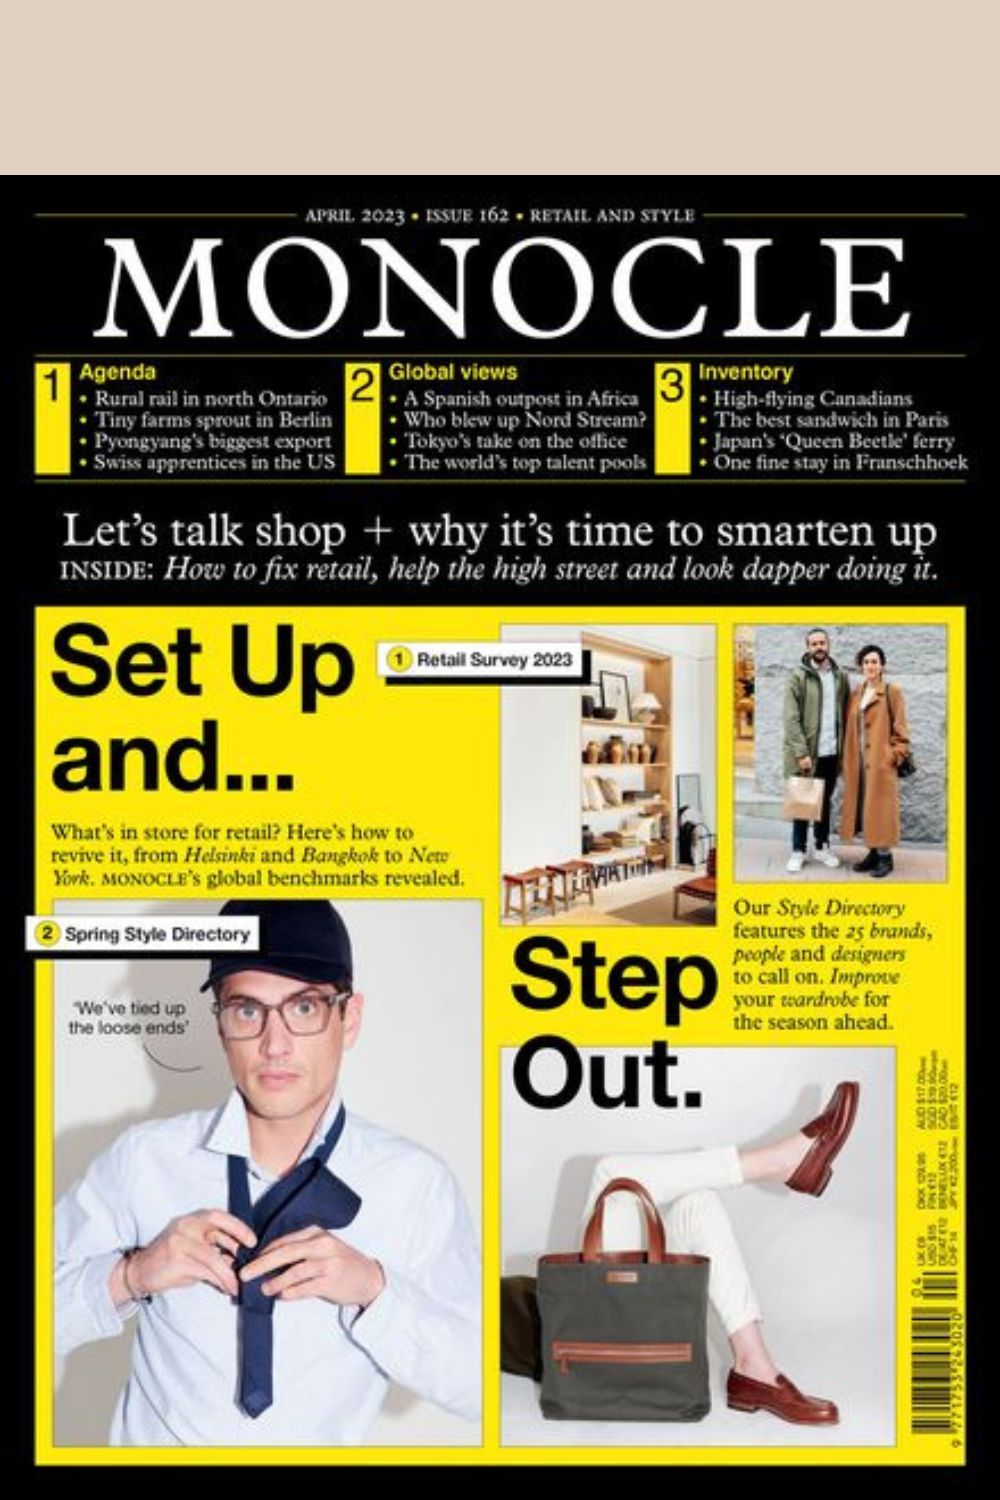 Monocle Magazine Issue 162 April 2023